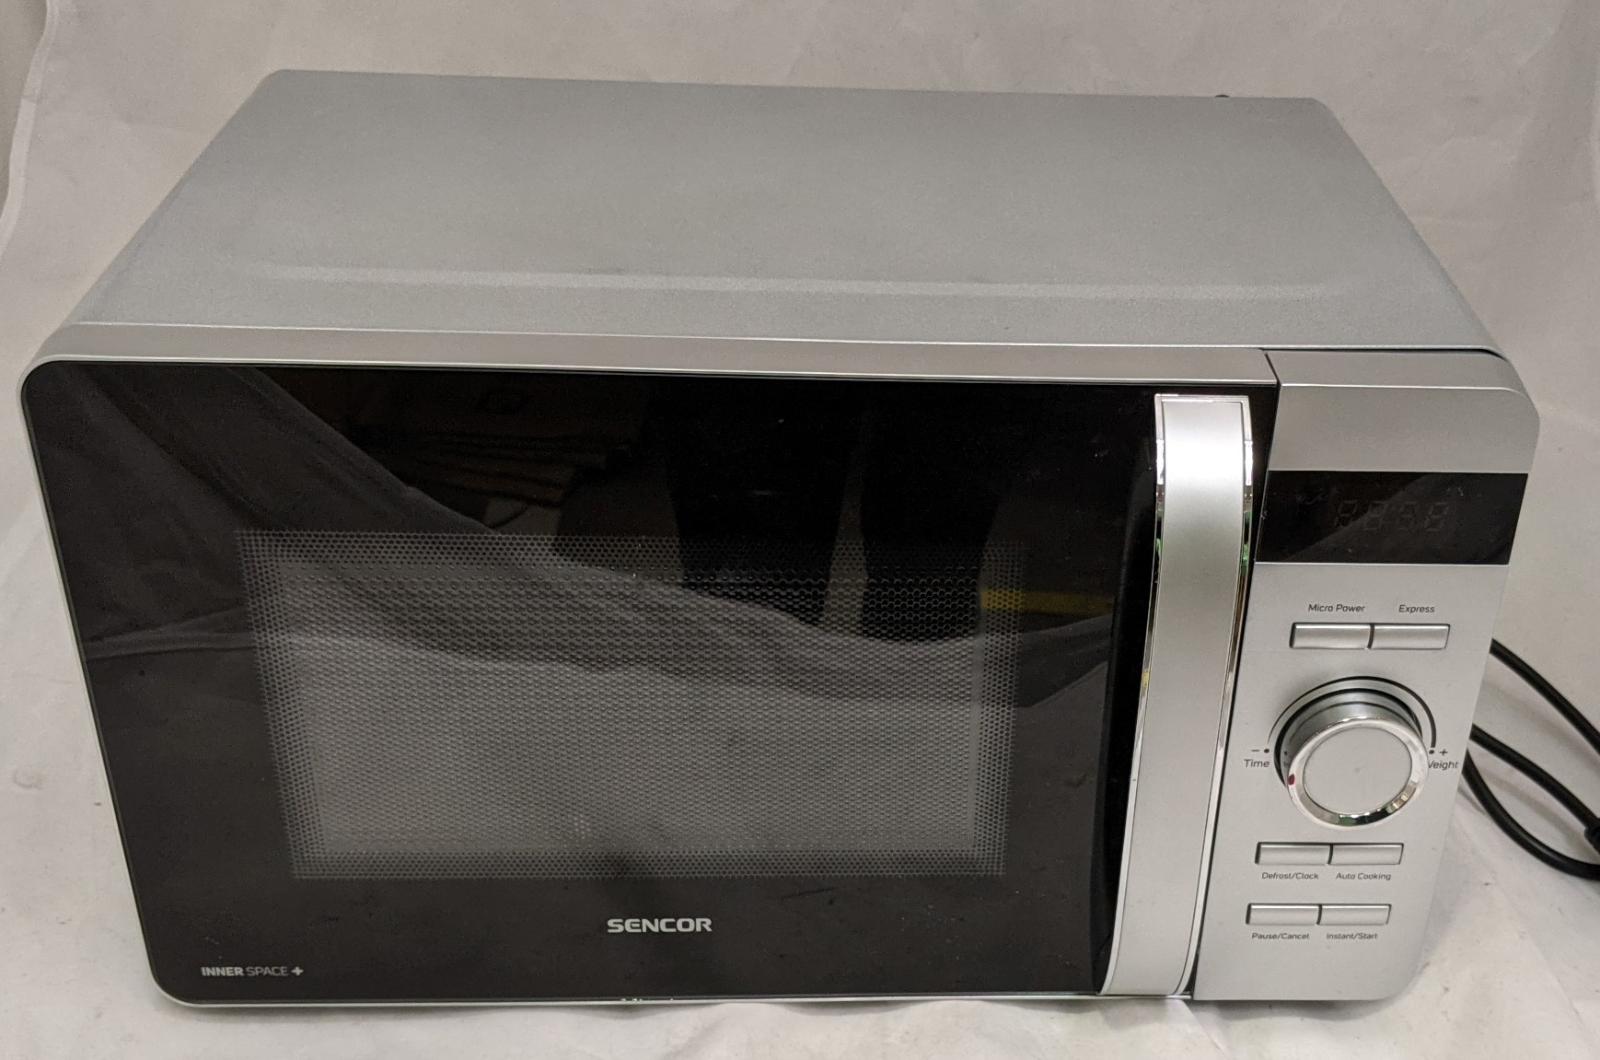 Microwave Oven, SMW 5217SL